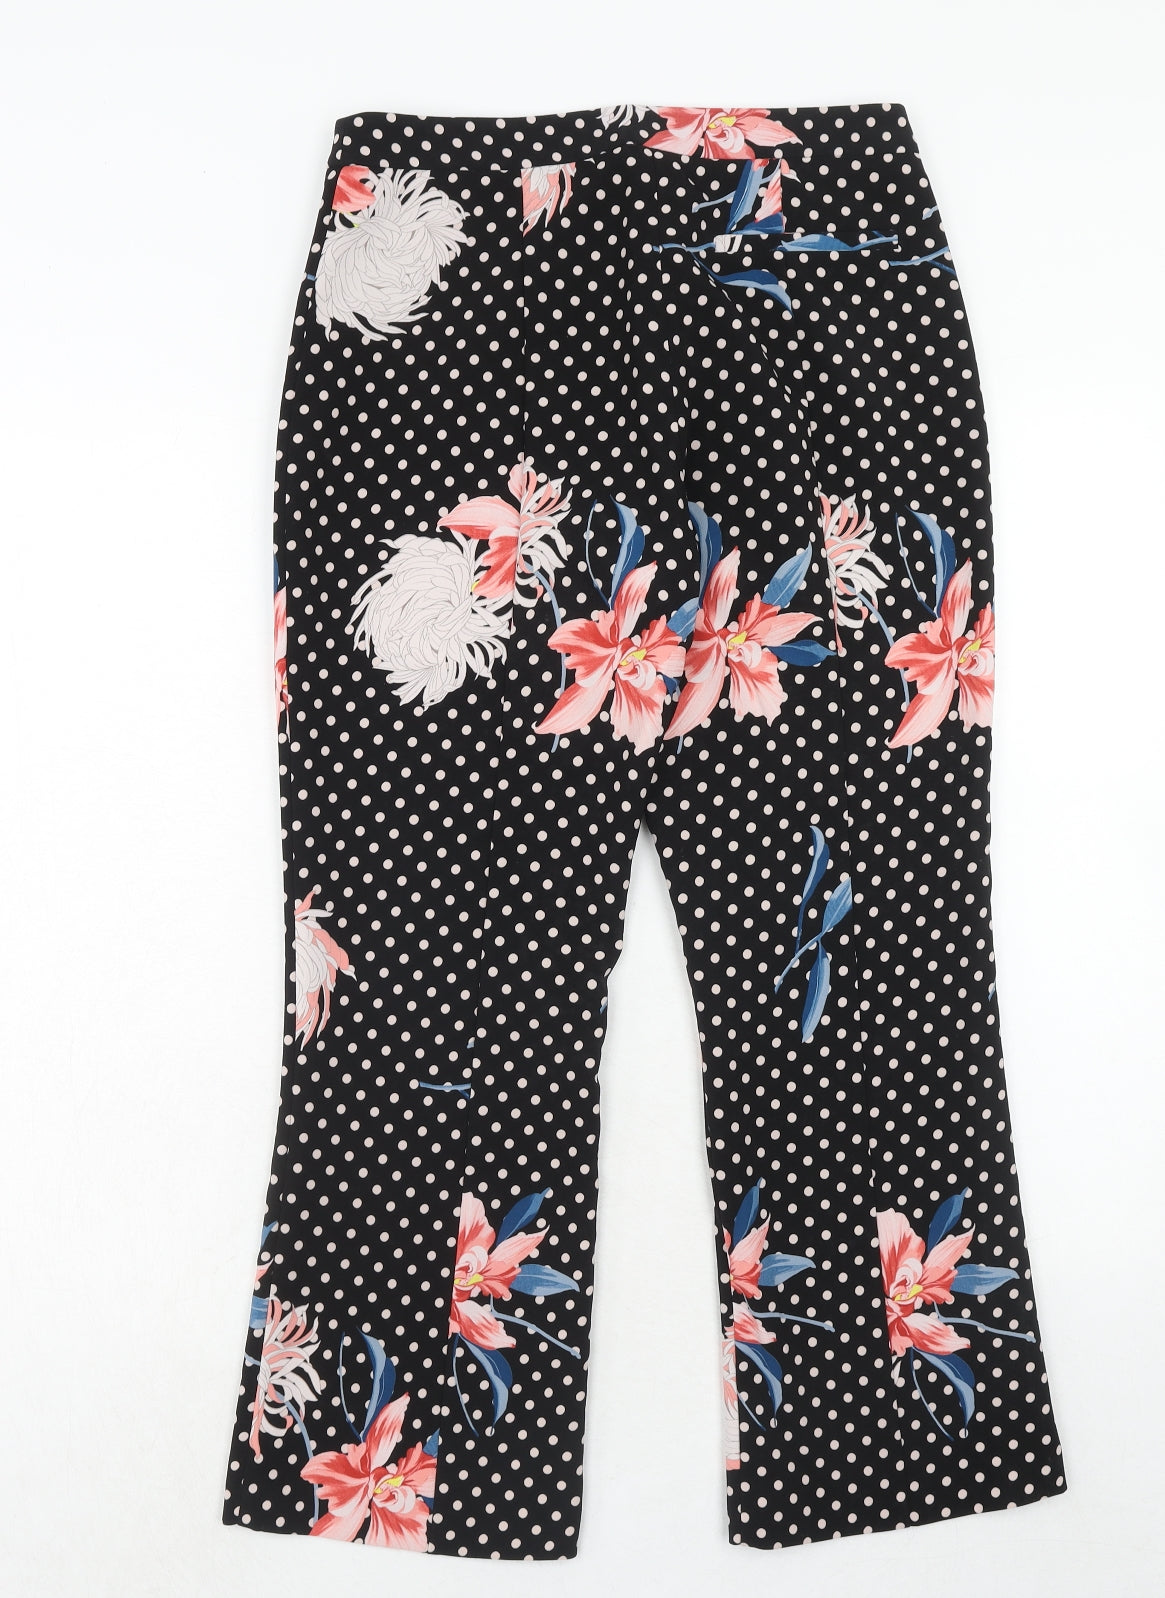 Topshop Womens Black Floral Polyester Trousers Size 10 Regular Hook & Eye